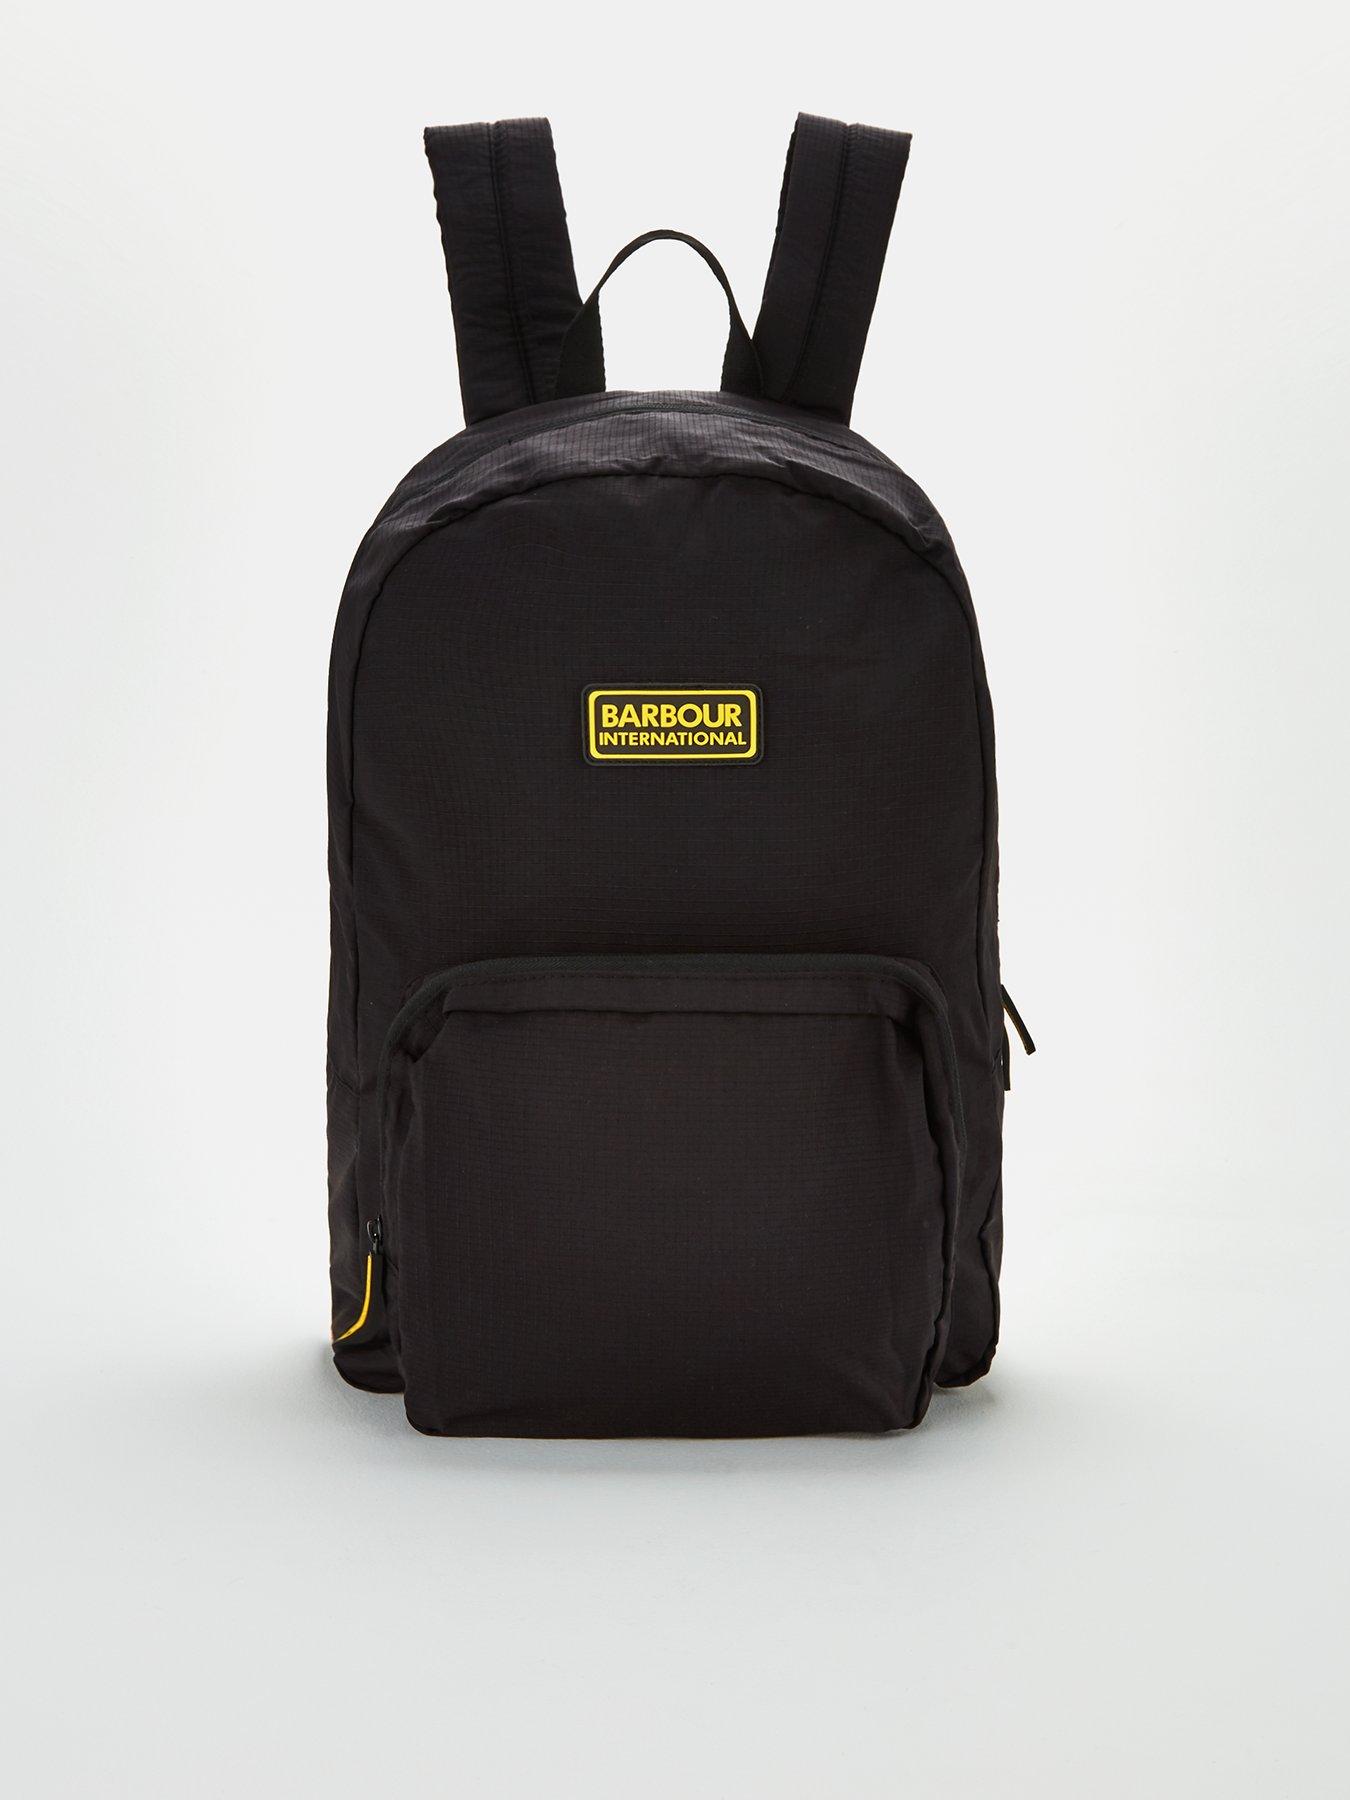 Barbour International Ripstop Backpack 